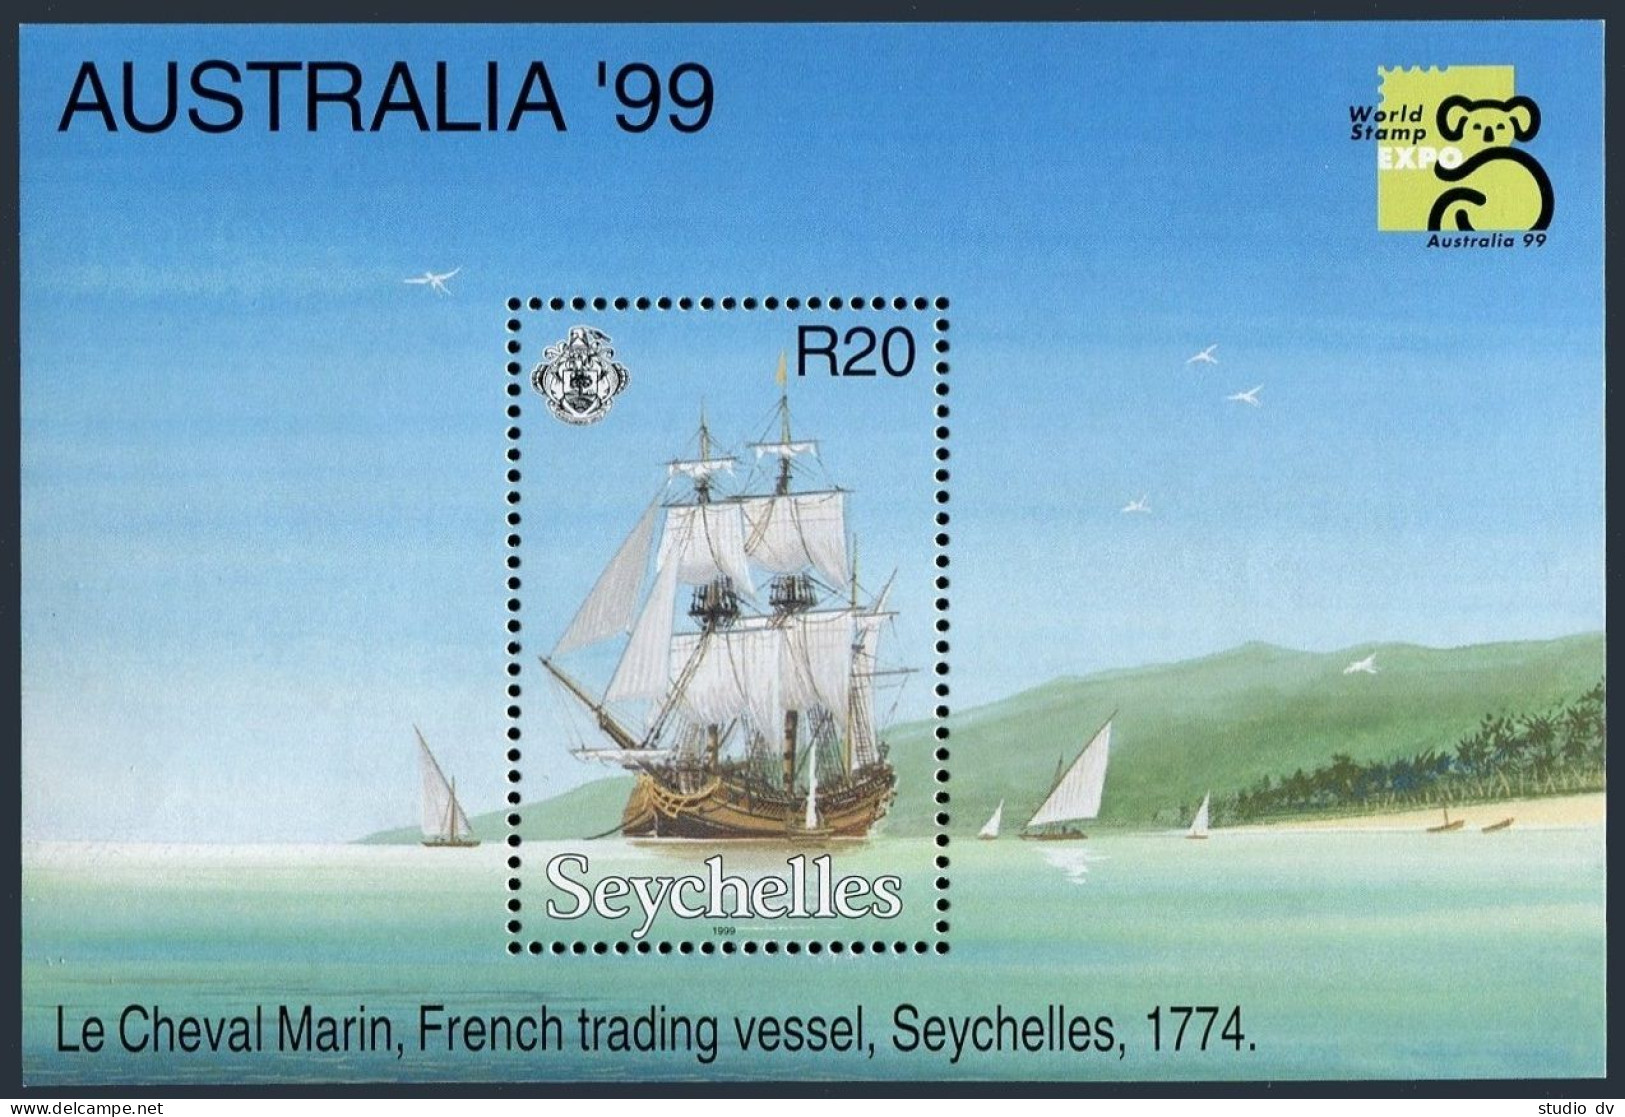 Seychelles 808,MNH. PHILEXPO-1999,Australia.Vessel The Cheval Marin,1774. - Seychelles (1976-...)